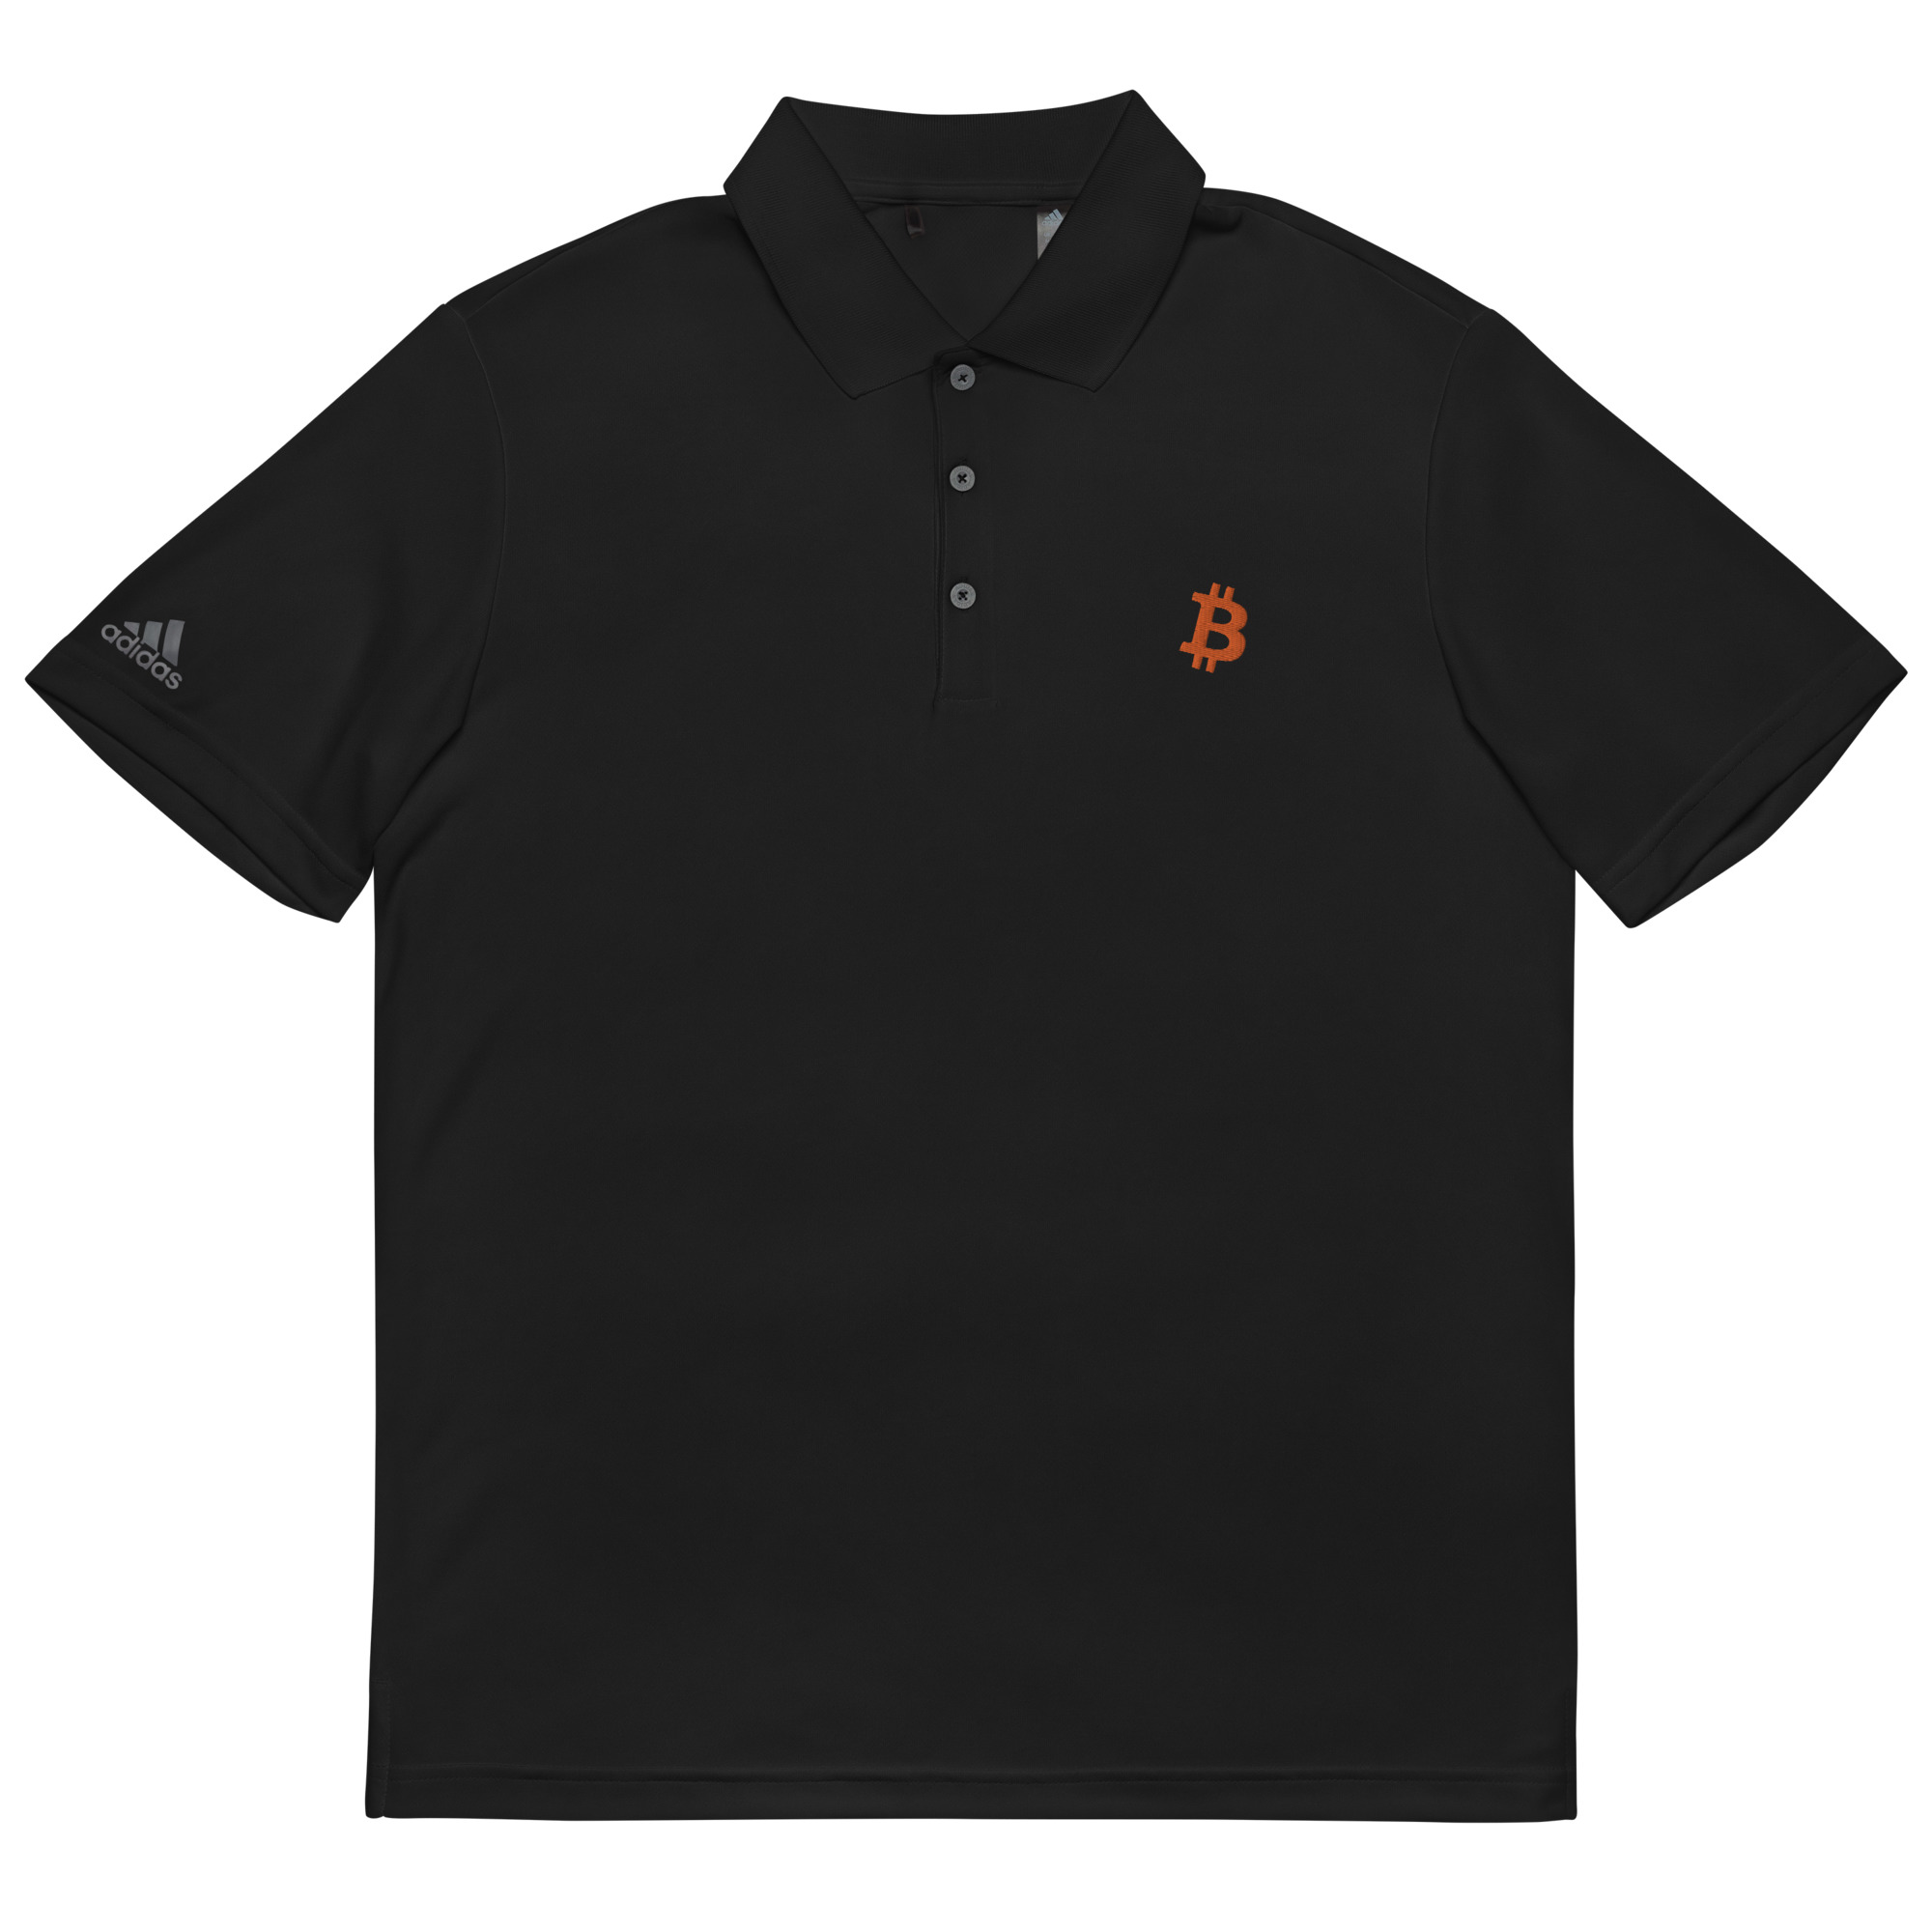 Bitcoin shirt - bitcoin adidas polo shirt lying flat - Black bitcoin polo shirt